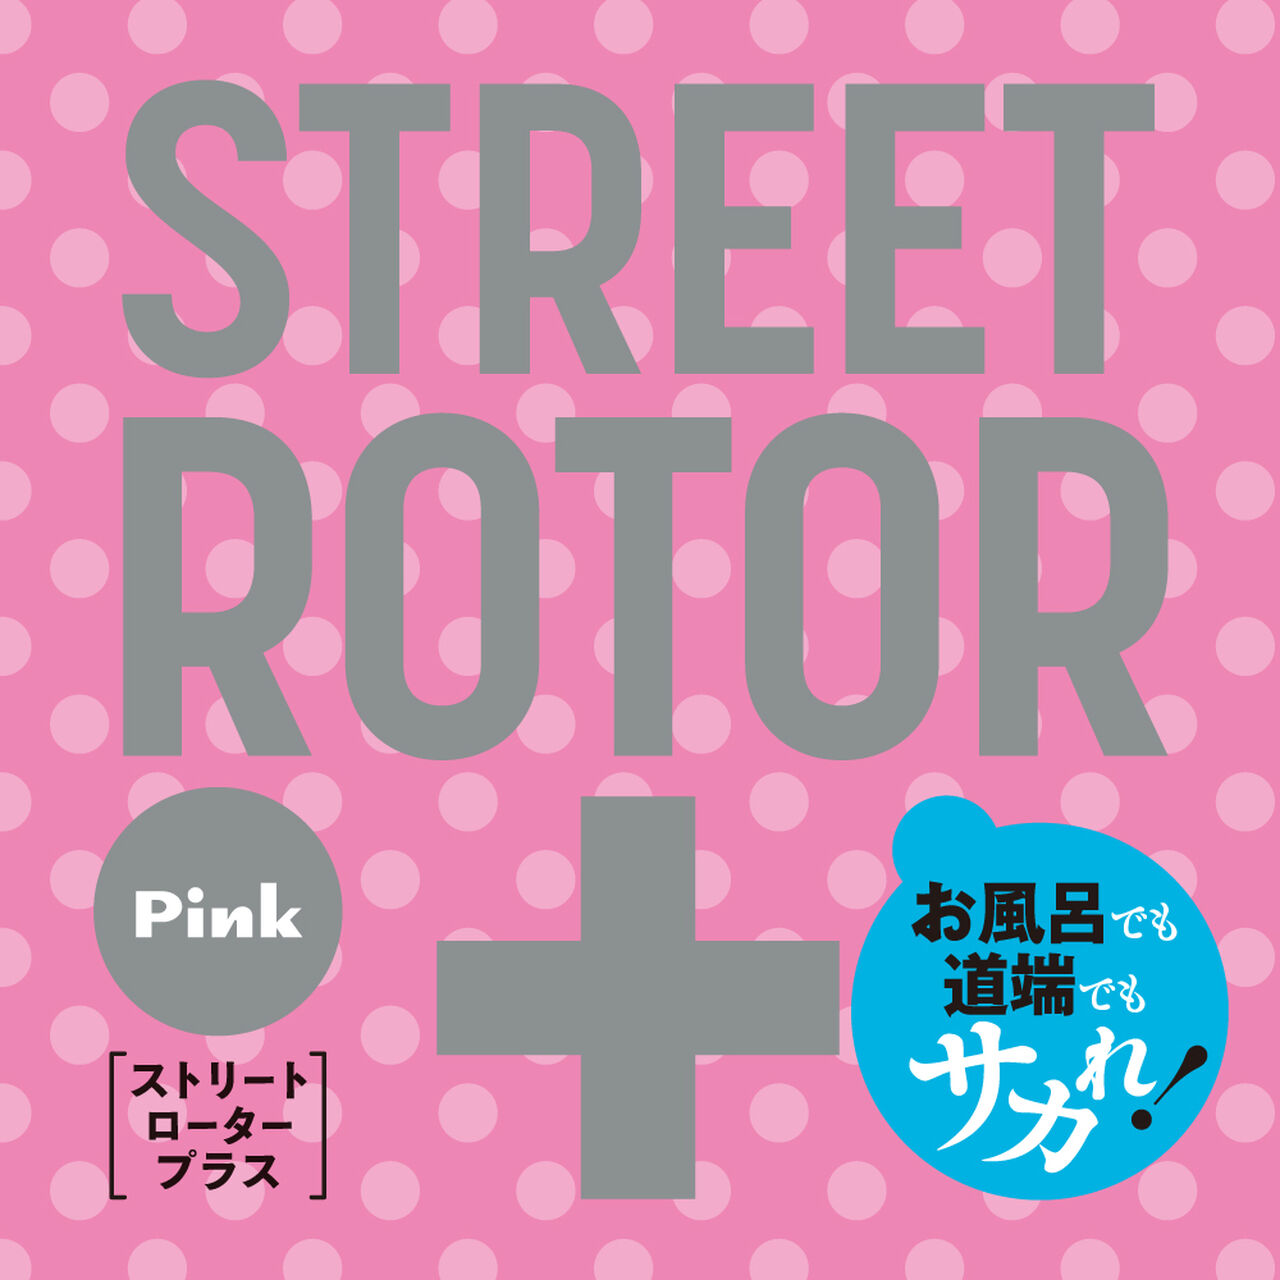 STREET ROTOR+ pink,, large image number 1